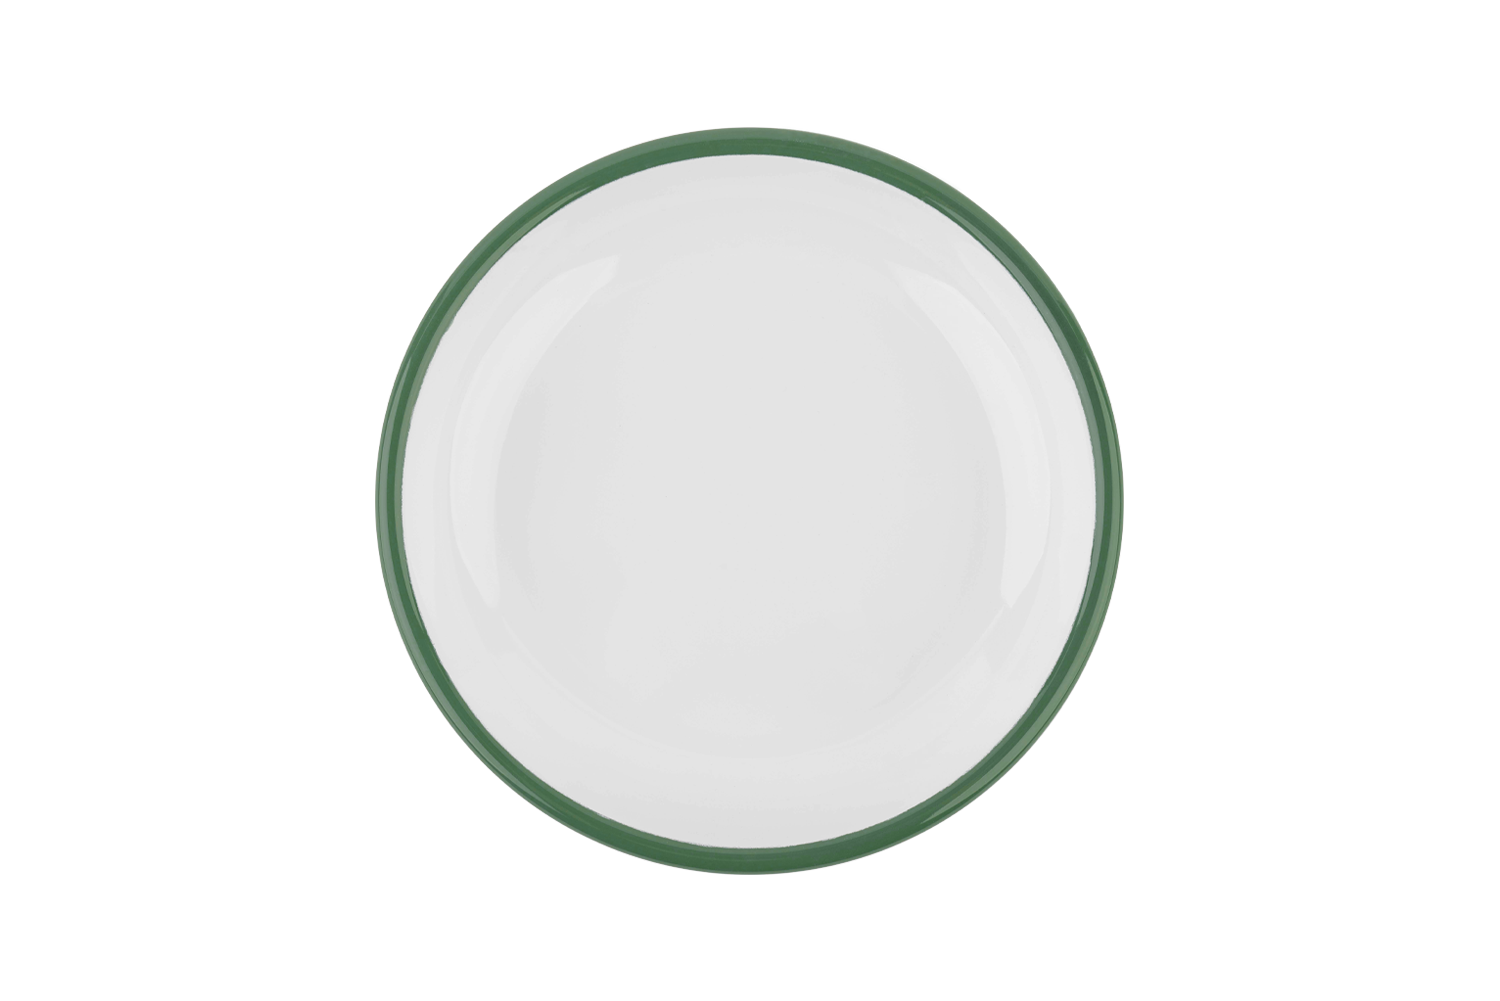 Blick ins weiße Innere des olivgrünen Tellers